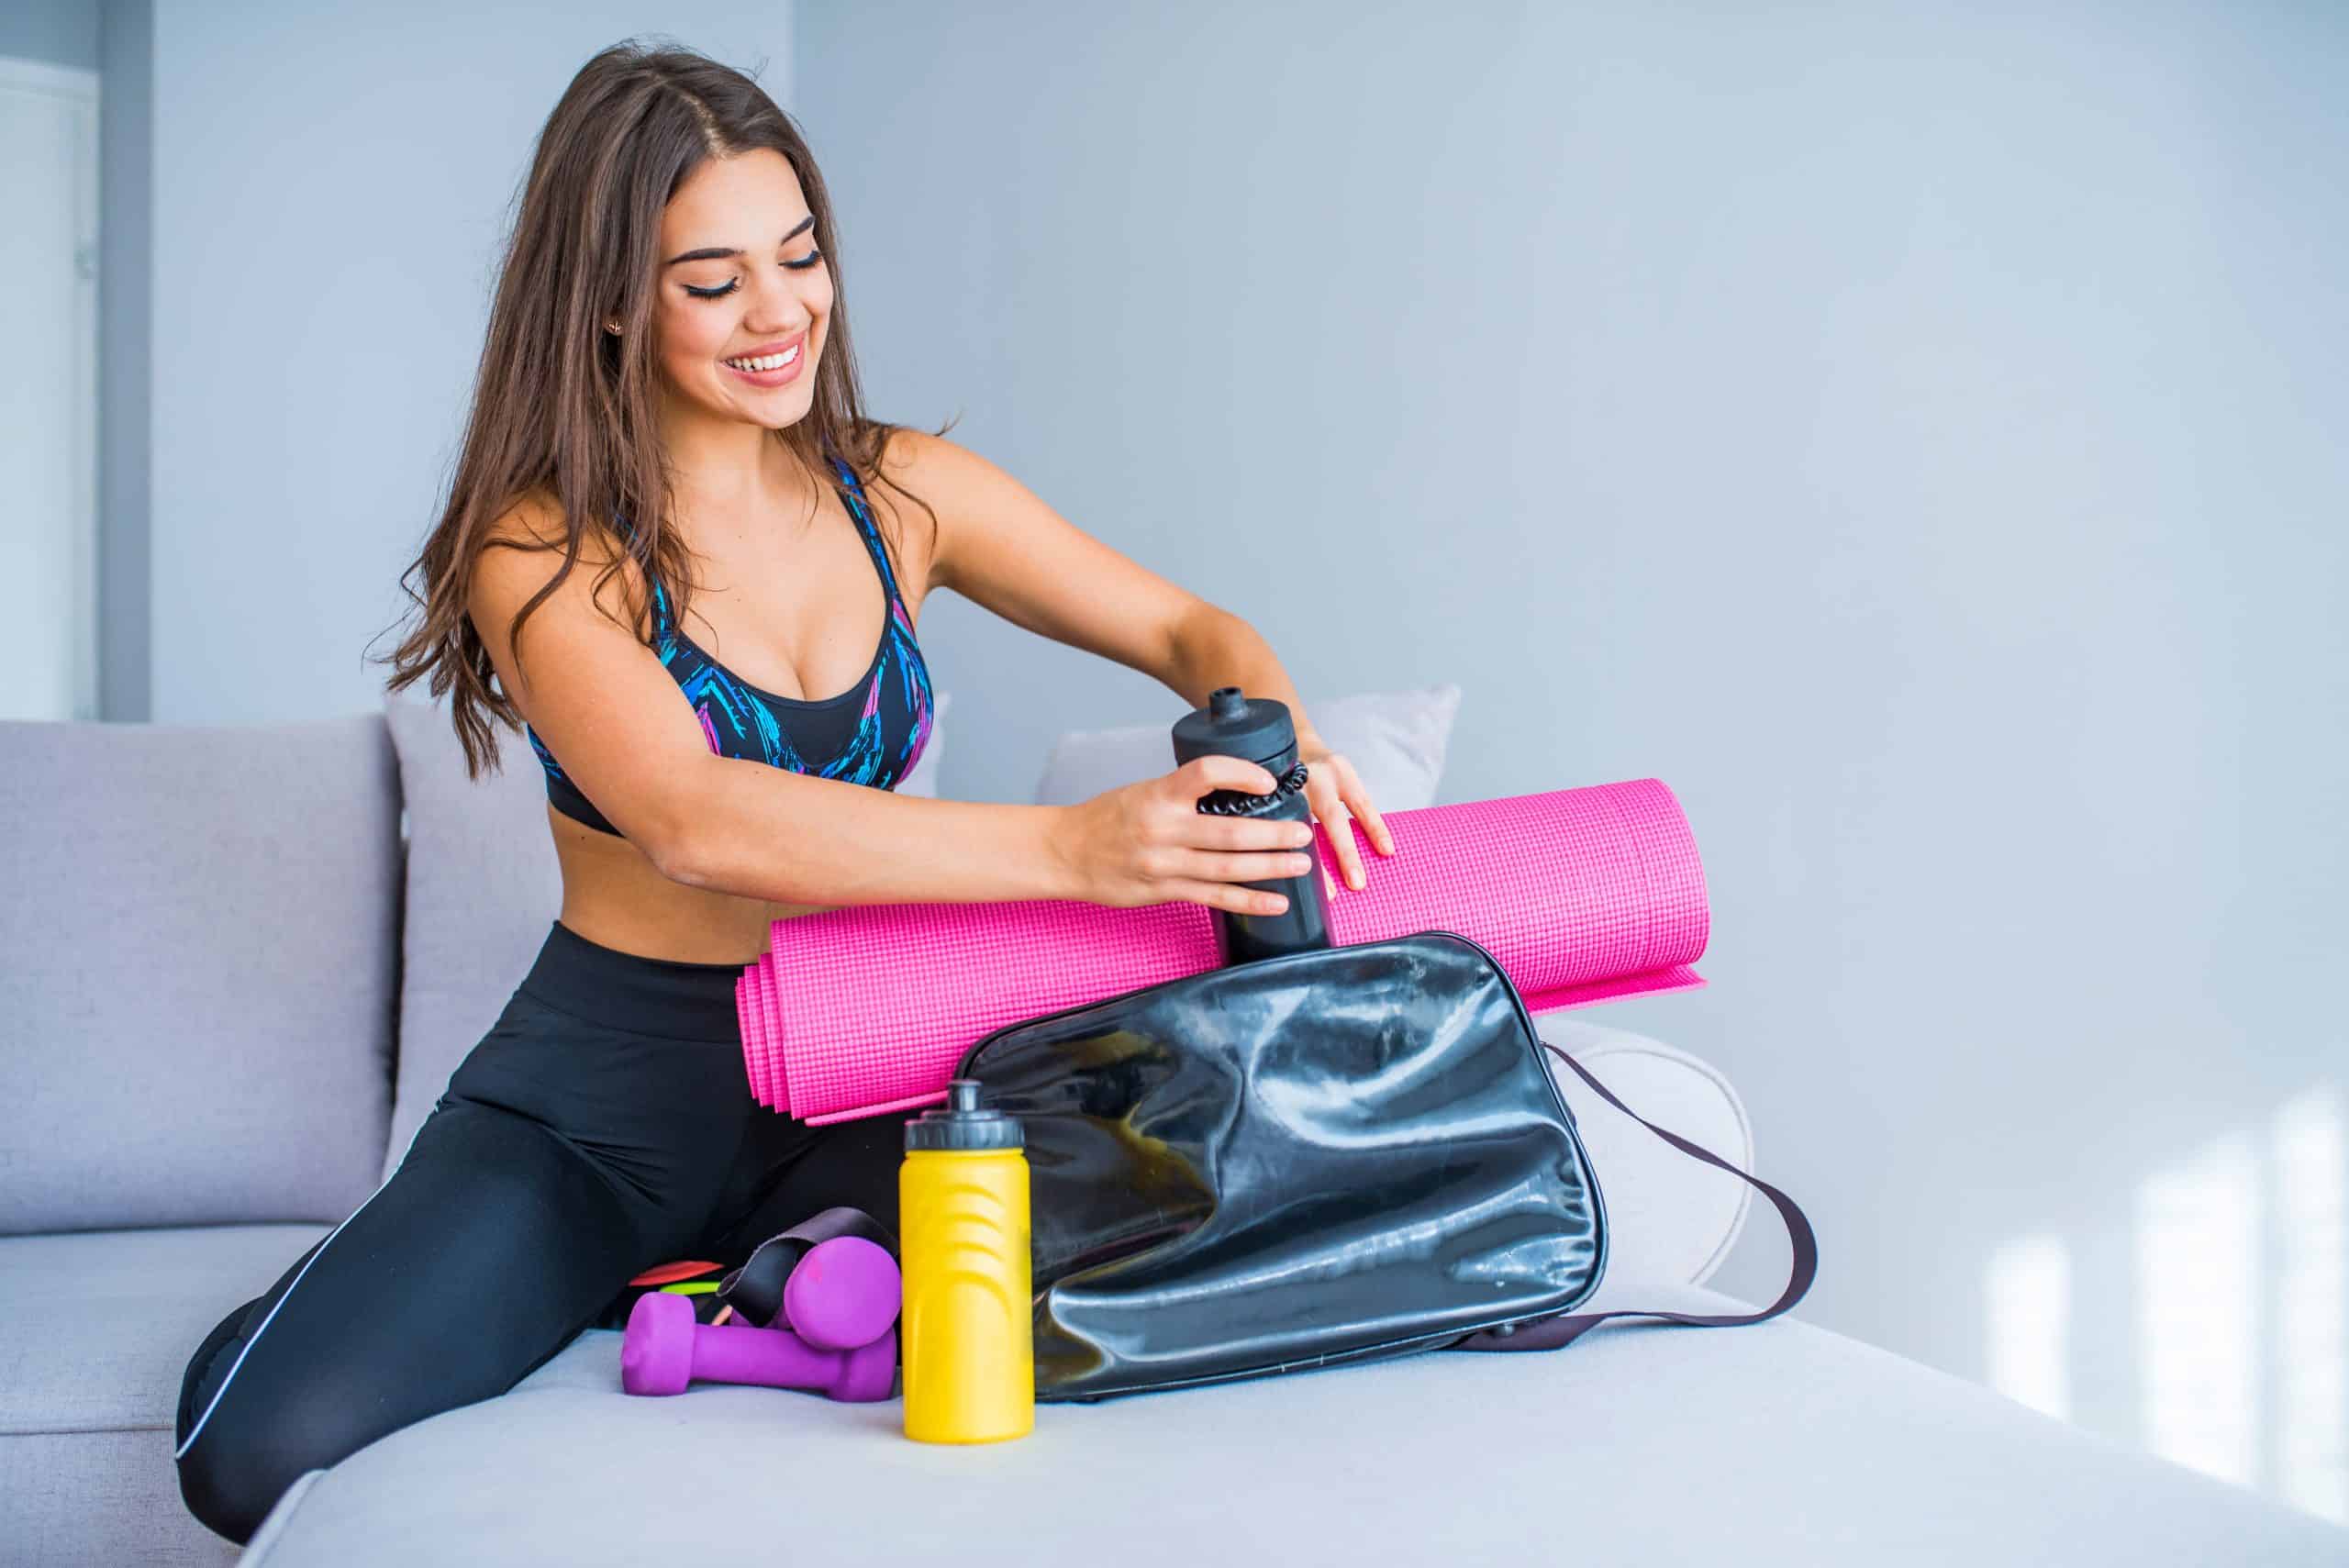 Gym Bag ESSENTIALS for WOMEN! - YouTube